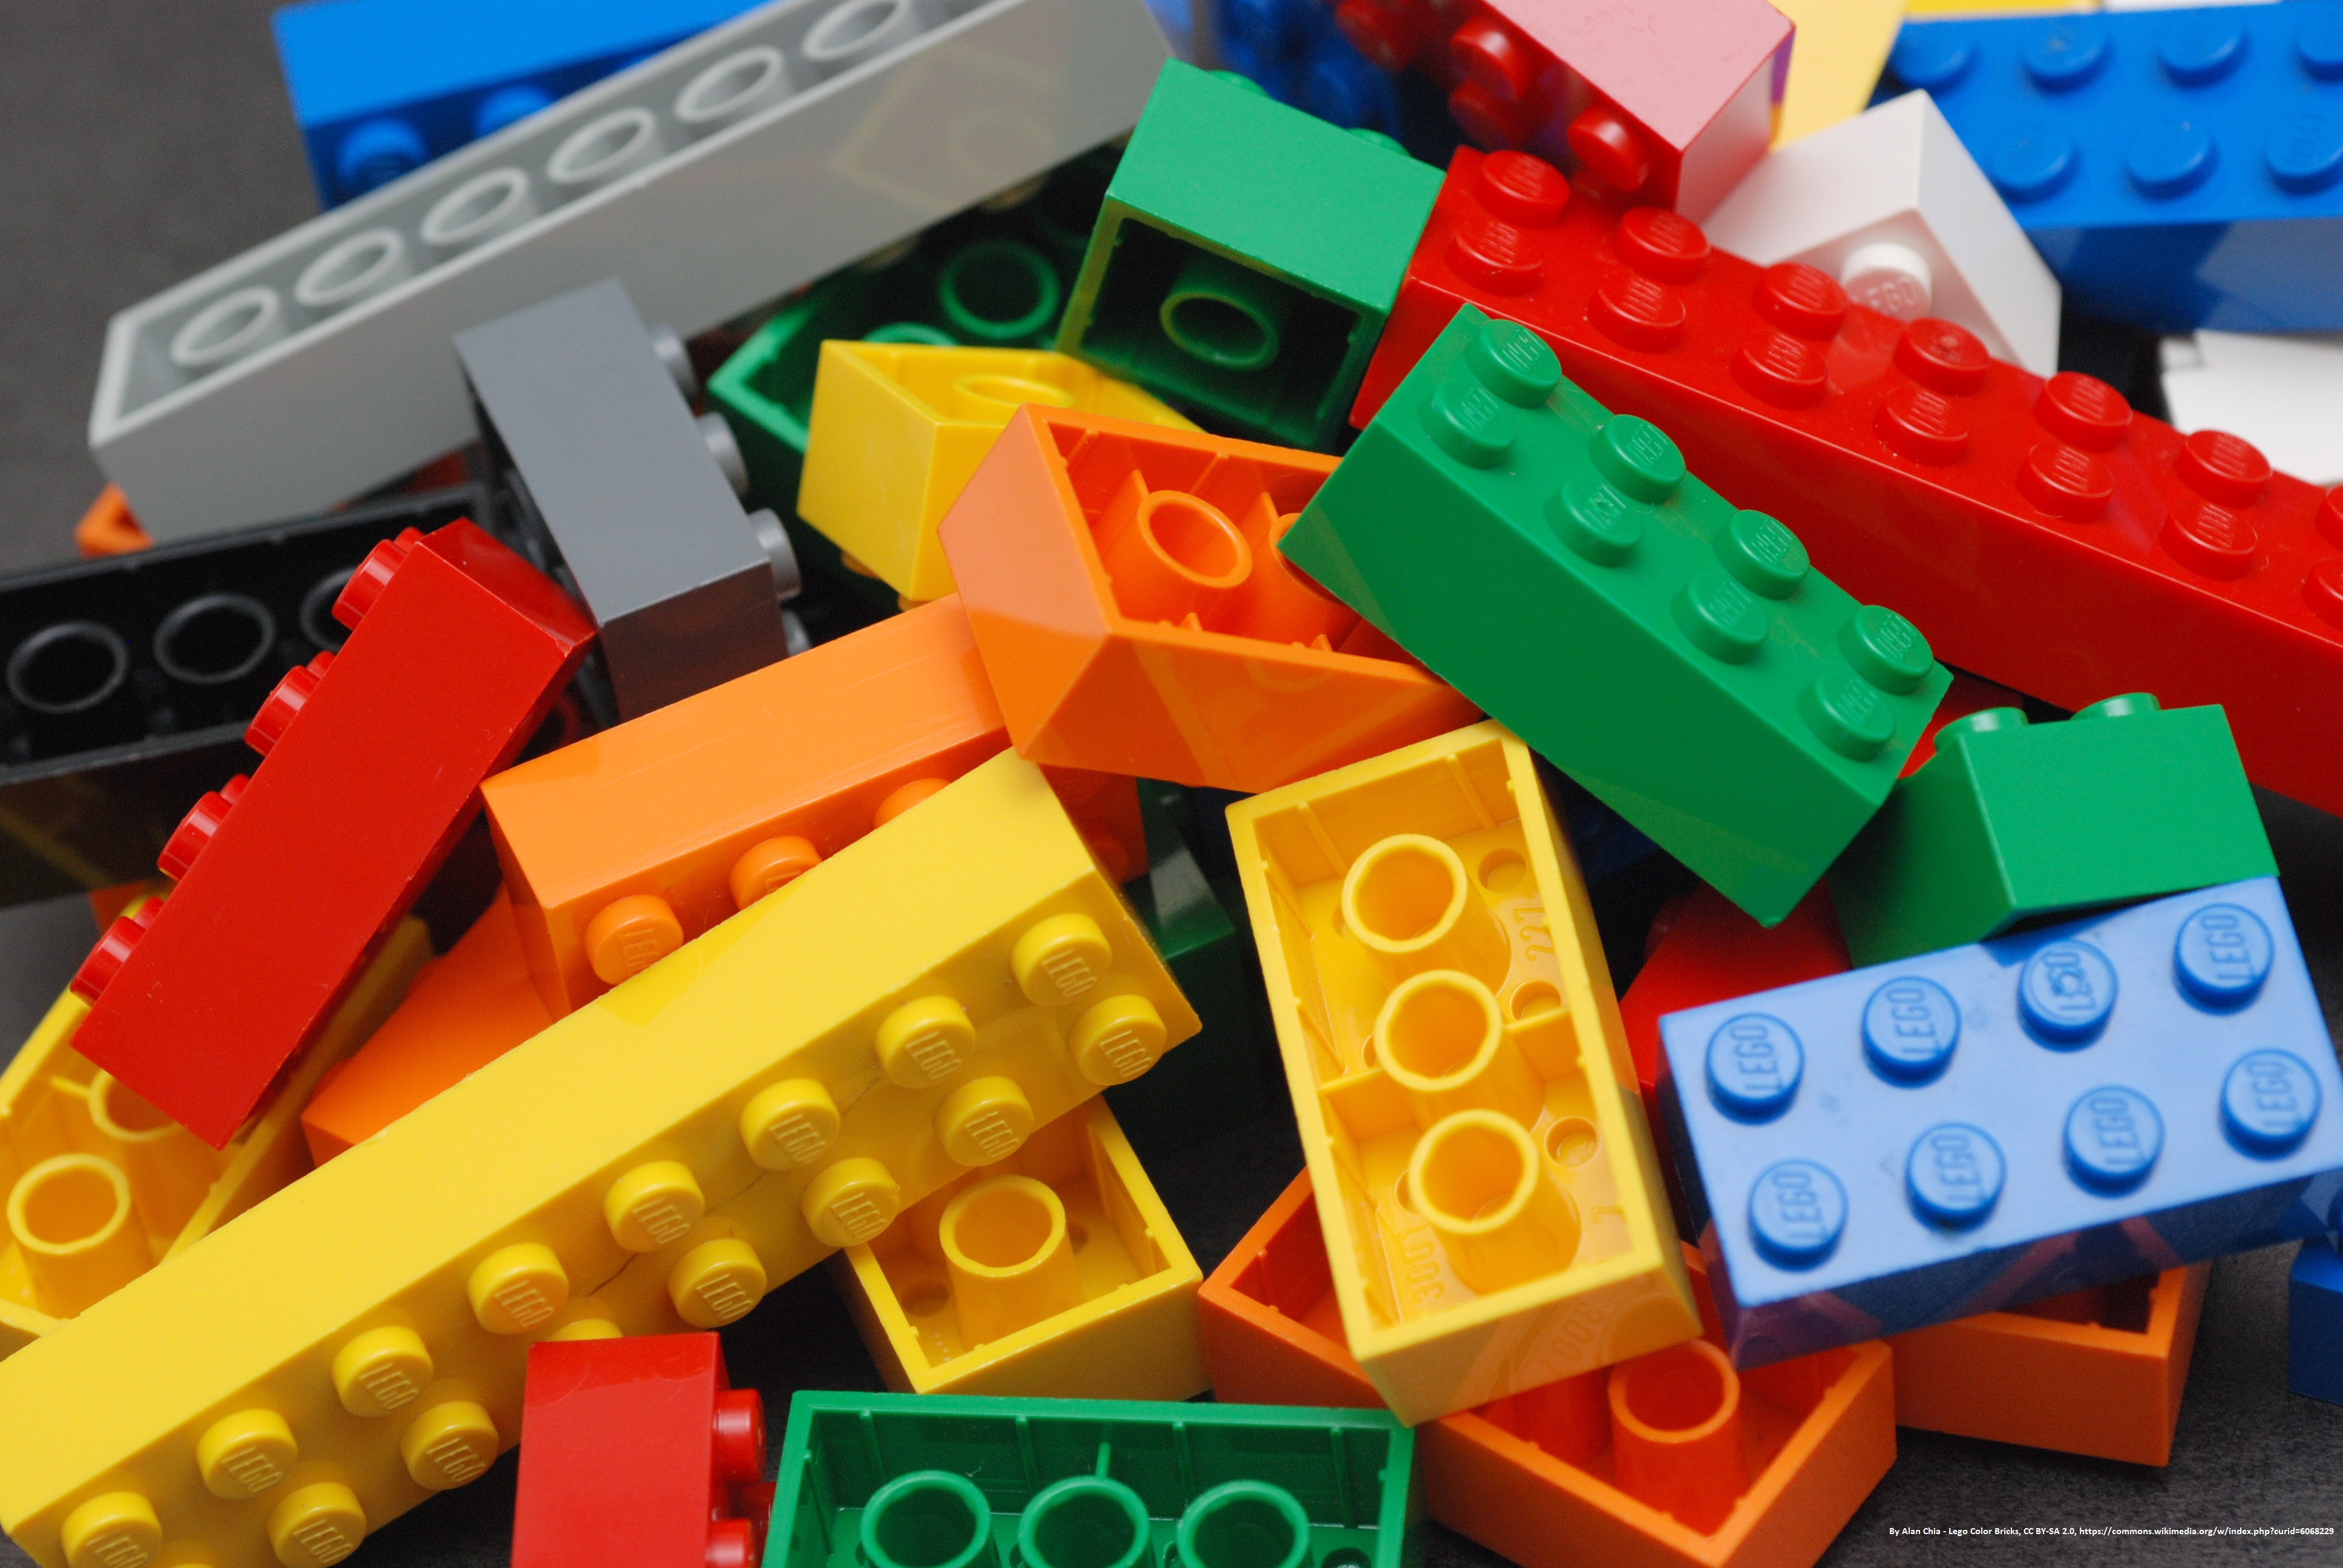 Pile of multicolored LEGO bricks on a dark gray background